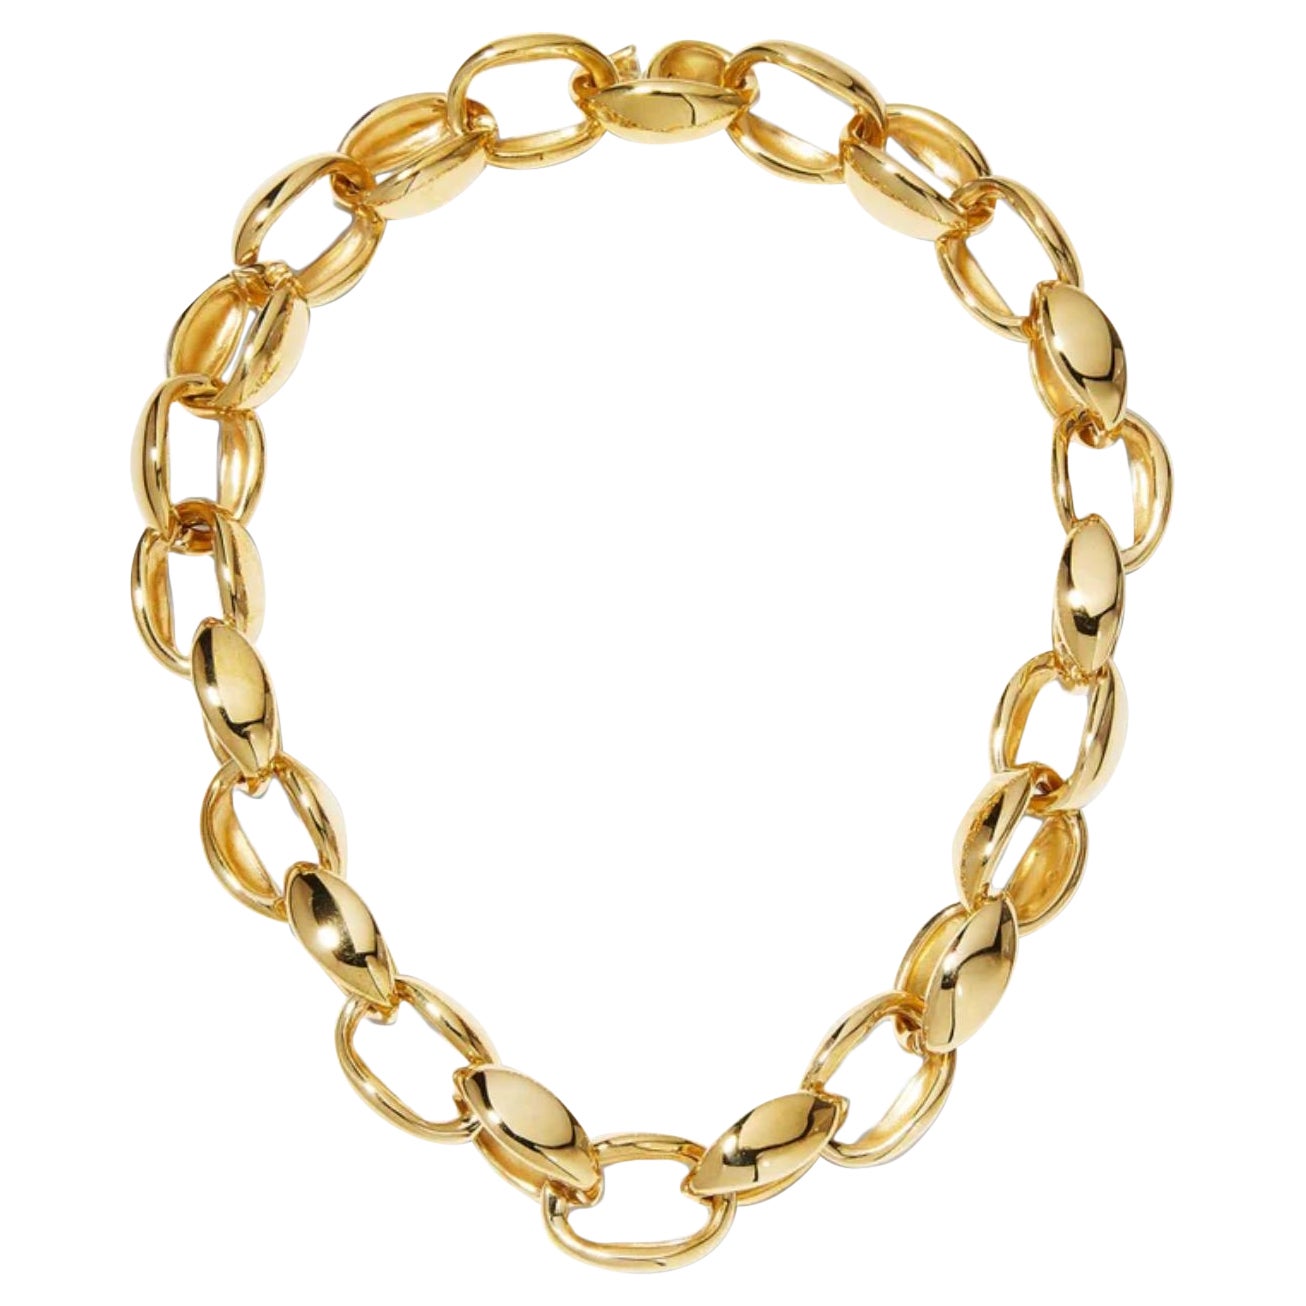 Ariana Boussard-Reifel Collier en or et bronze « Chunky Heritage » avec chaîne en vente